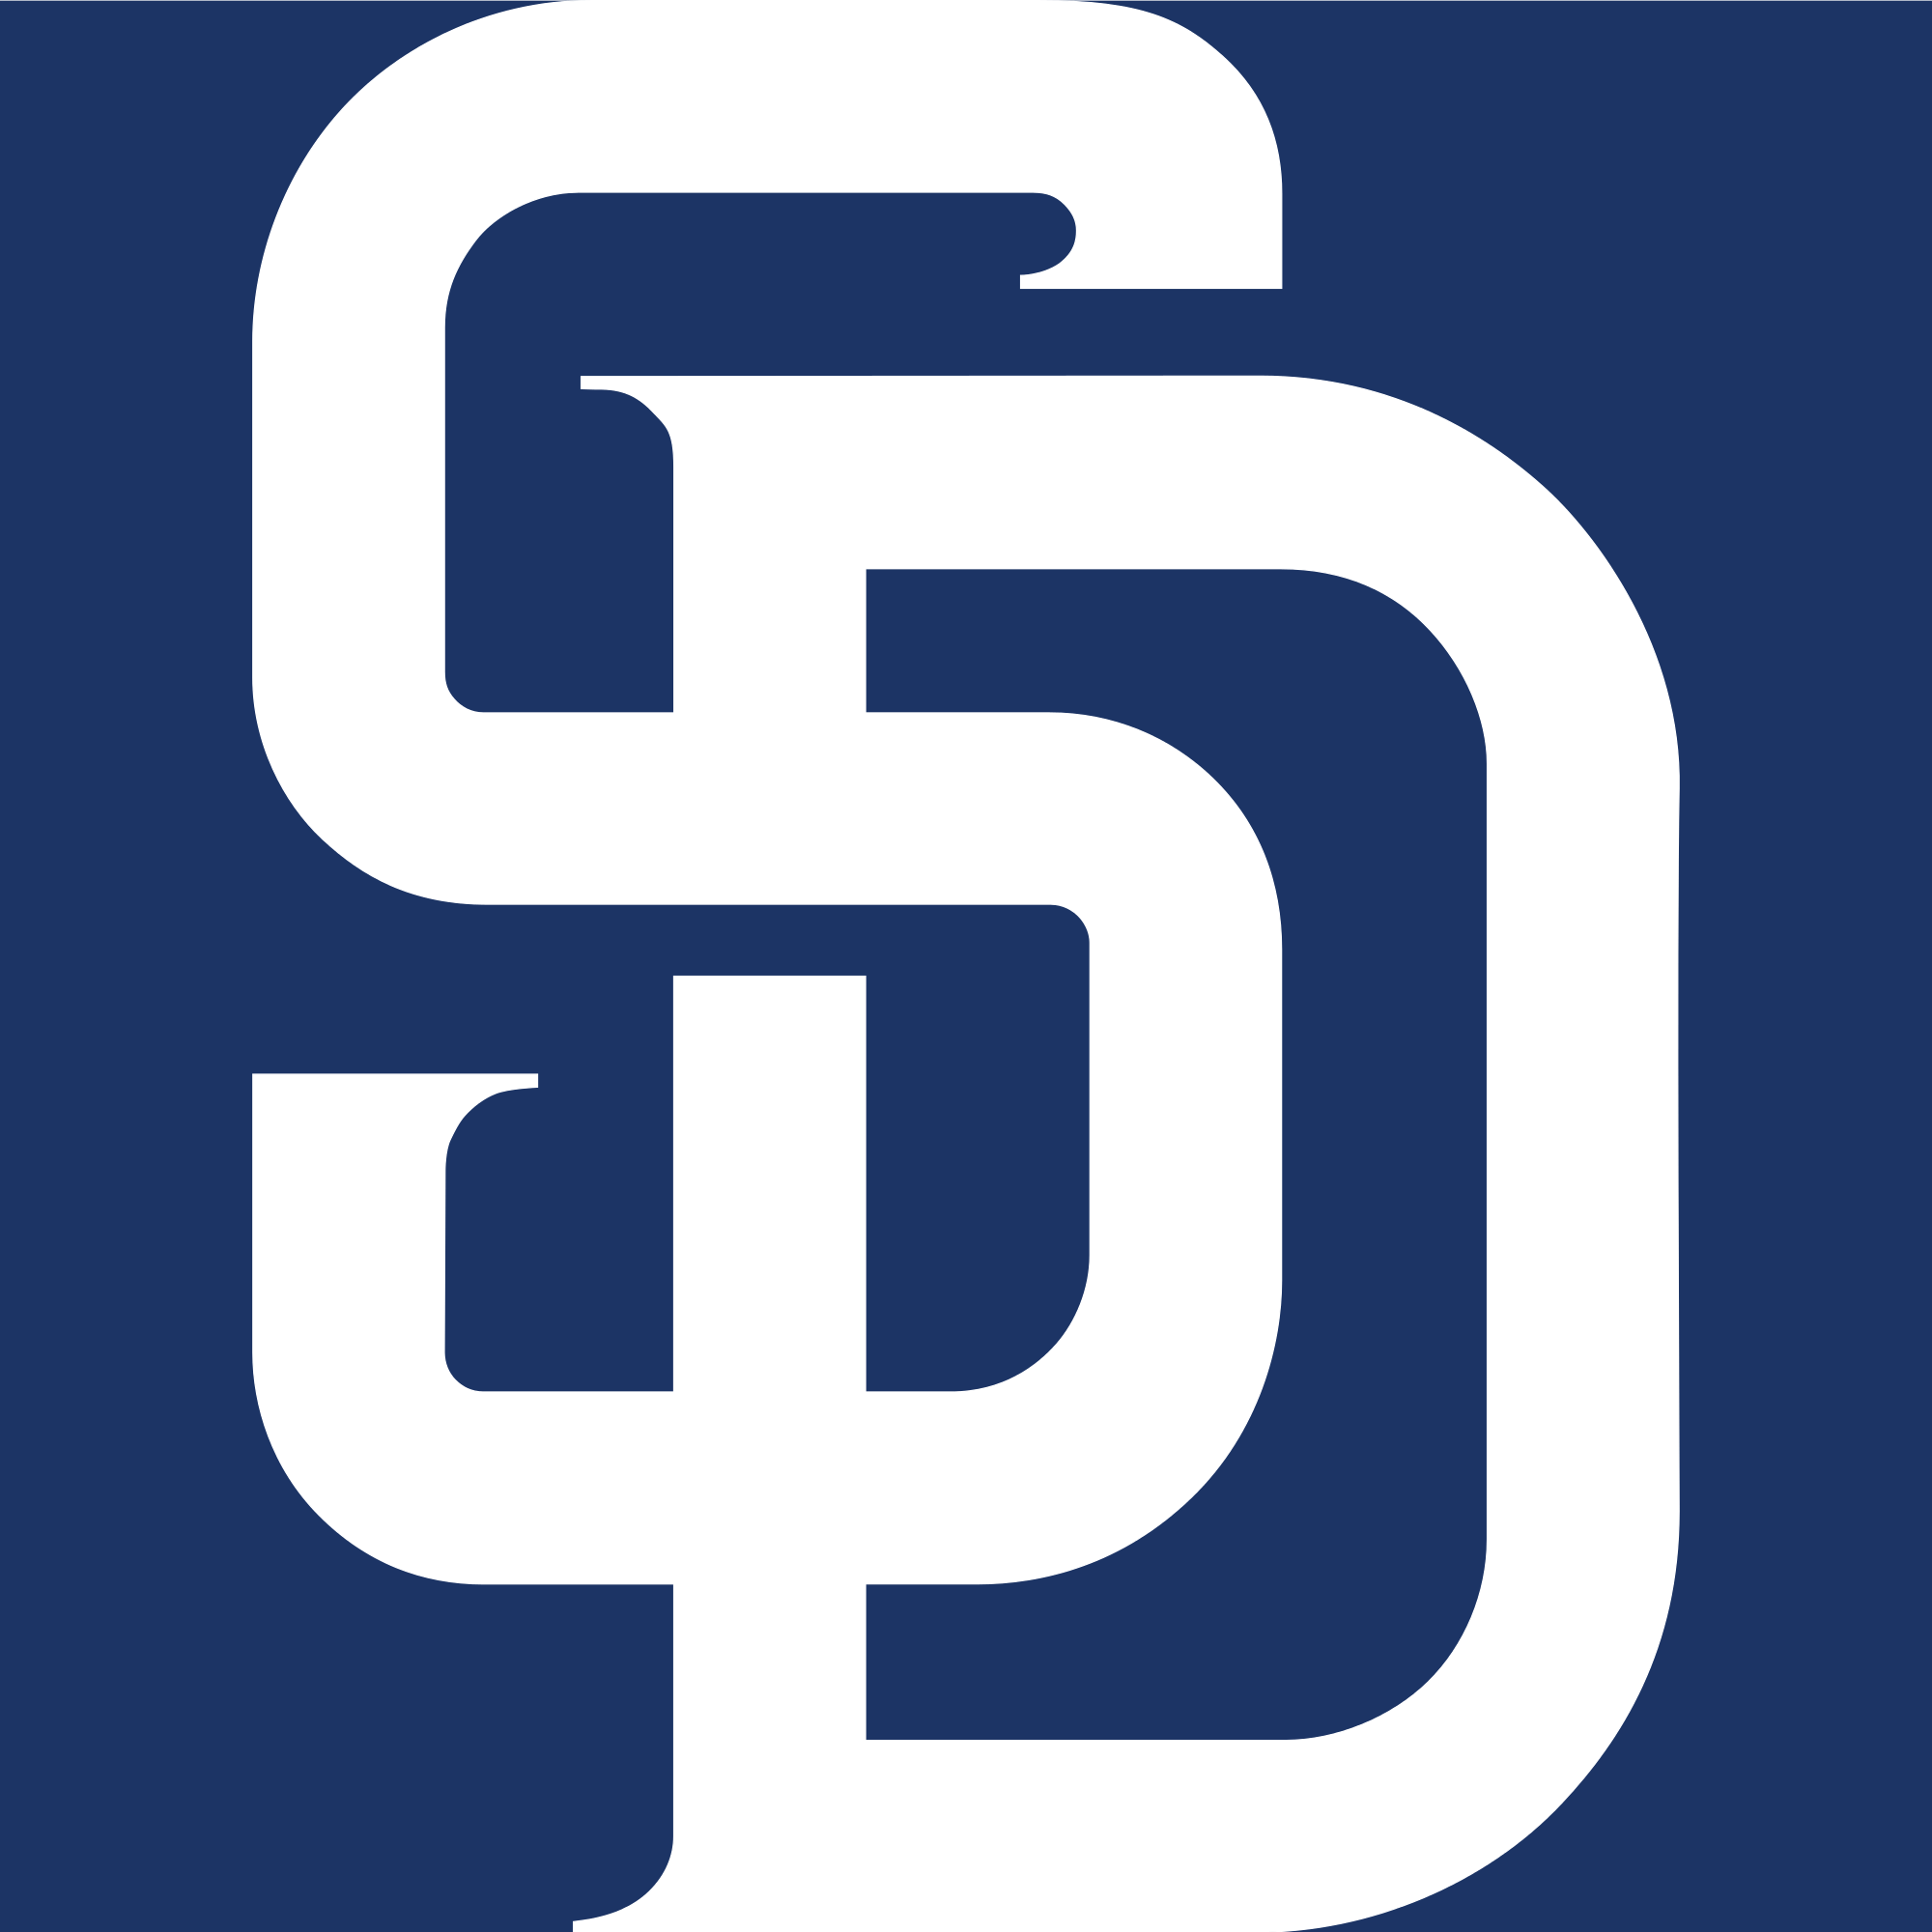 San Diego Padres Logo - File:San Diego Padres logotype.svg - Wikimedia Commons